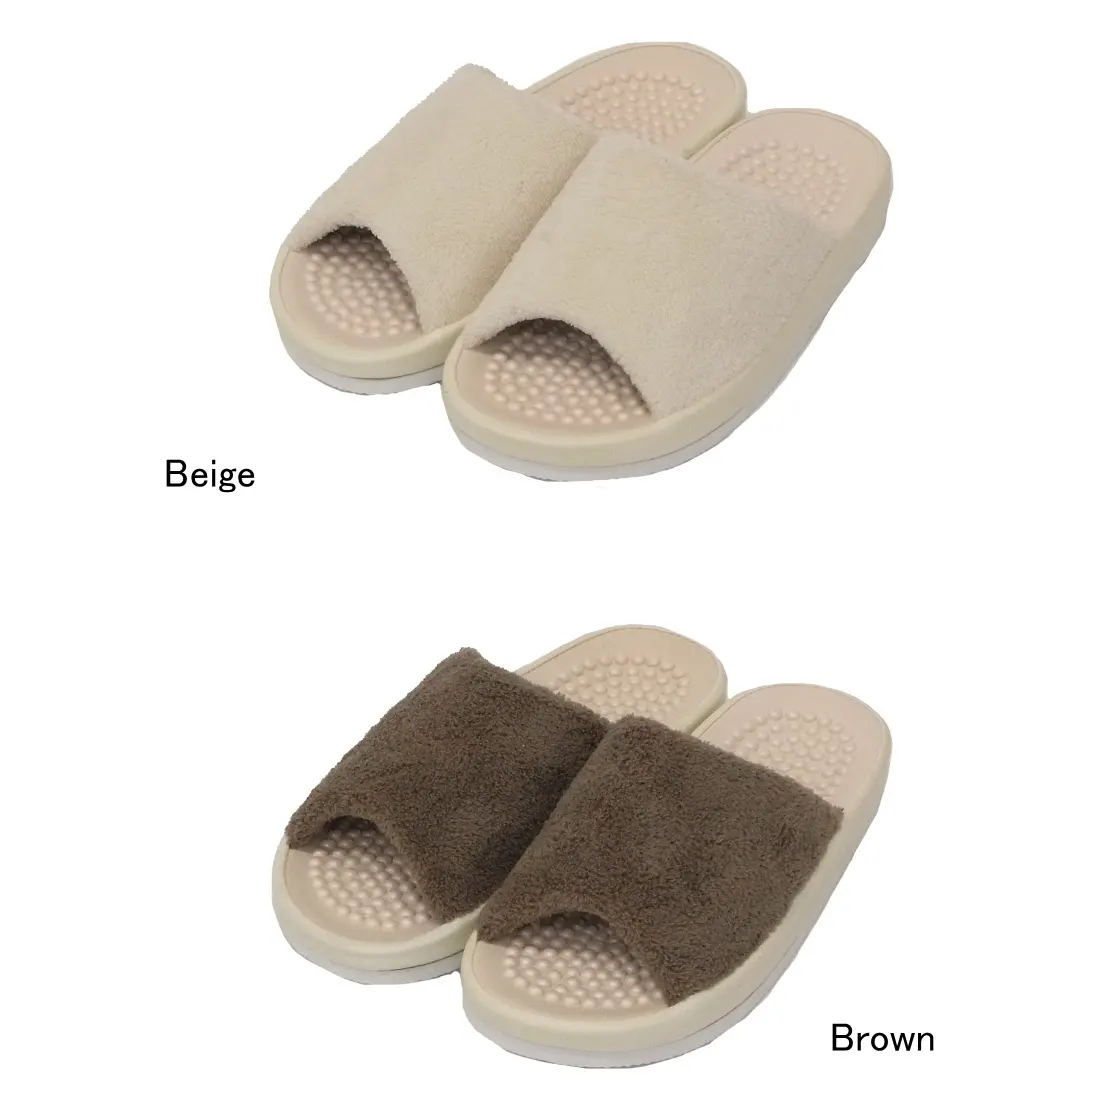 Japan reduce foot pressure men's comfort indoor house slippers